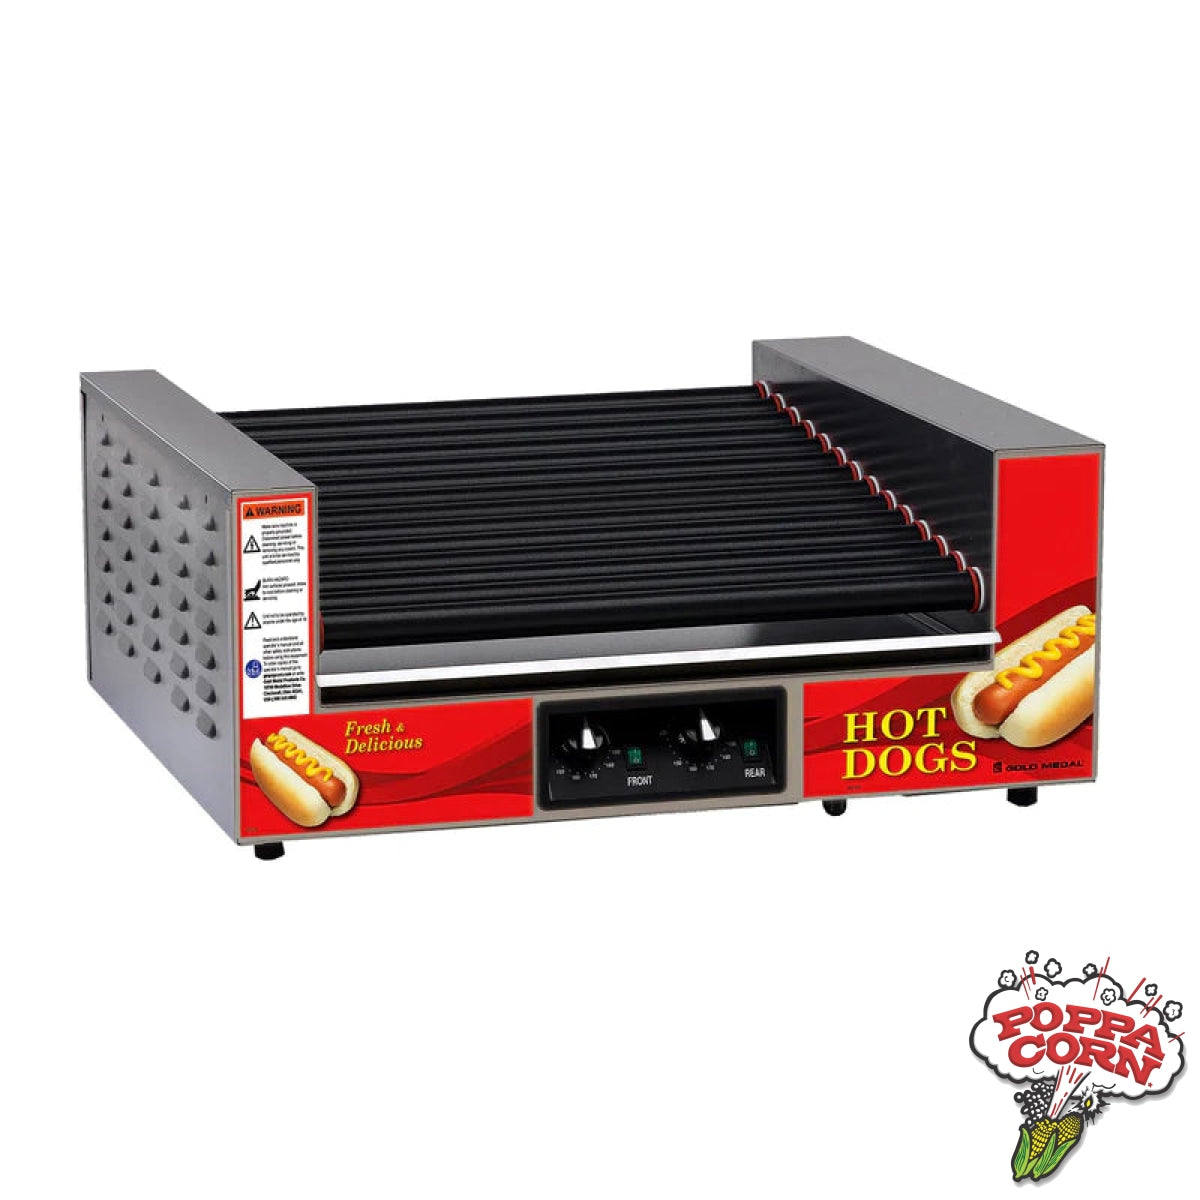 Double Diggity Hot Dog Grill (Non-Stick) - GM8223PE - Poppa Corn Corp